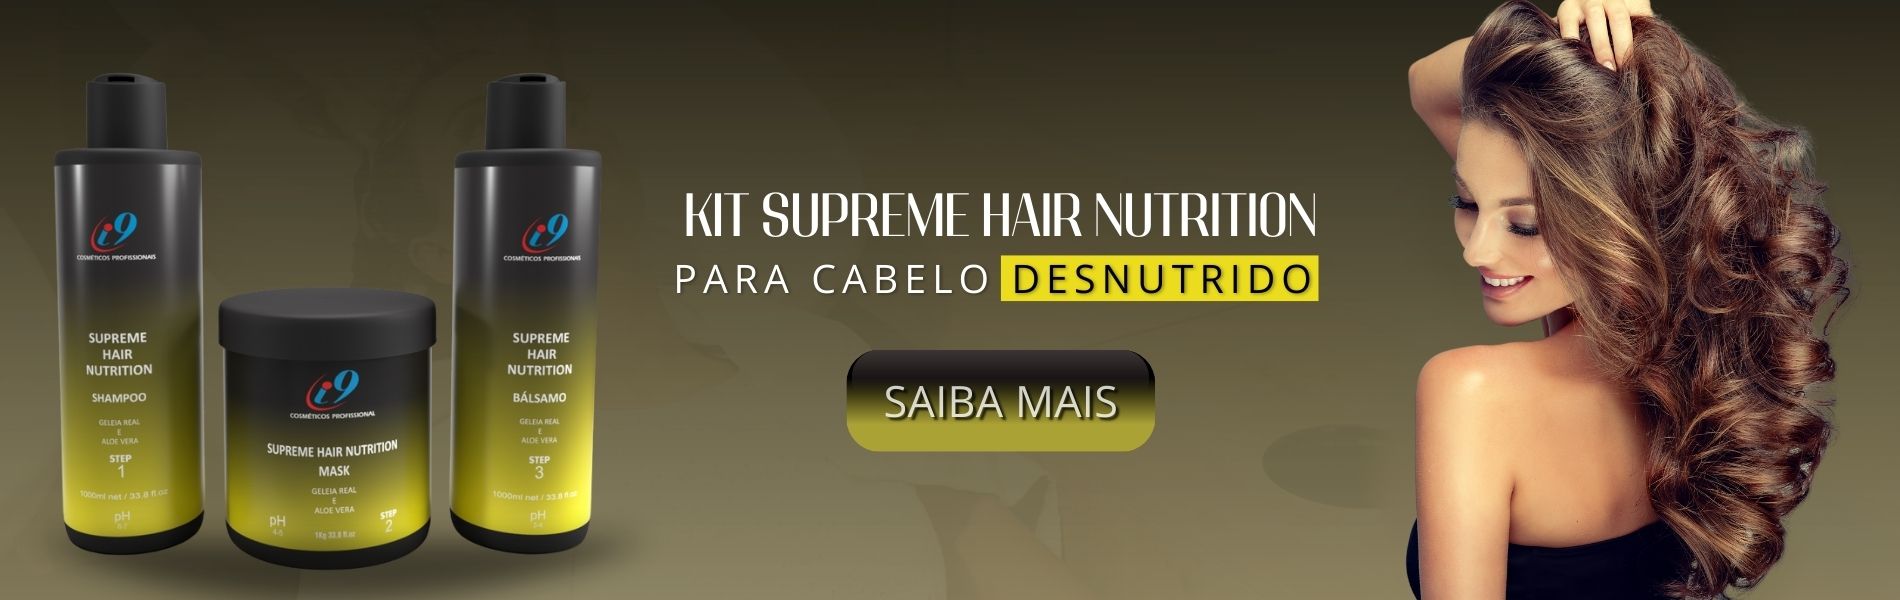 KIT SUPREME HAIR NUTRITION - G - desktop